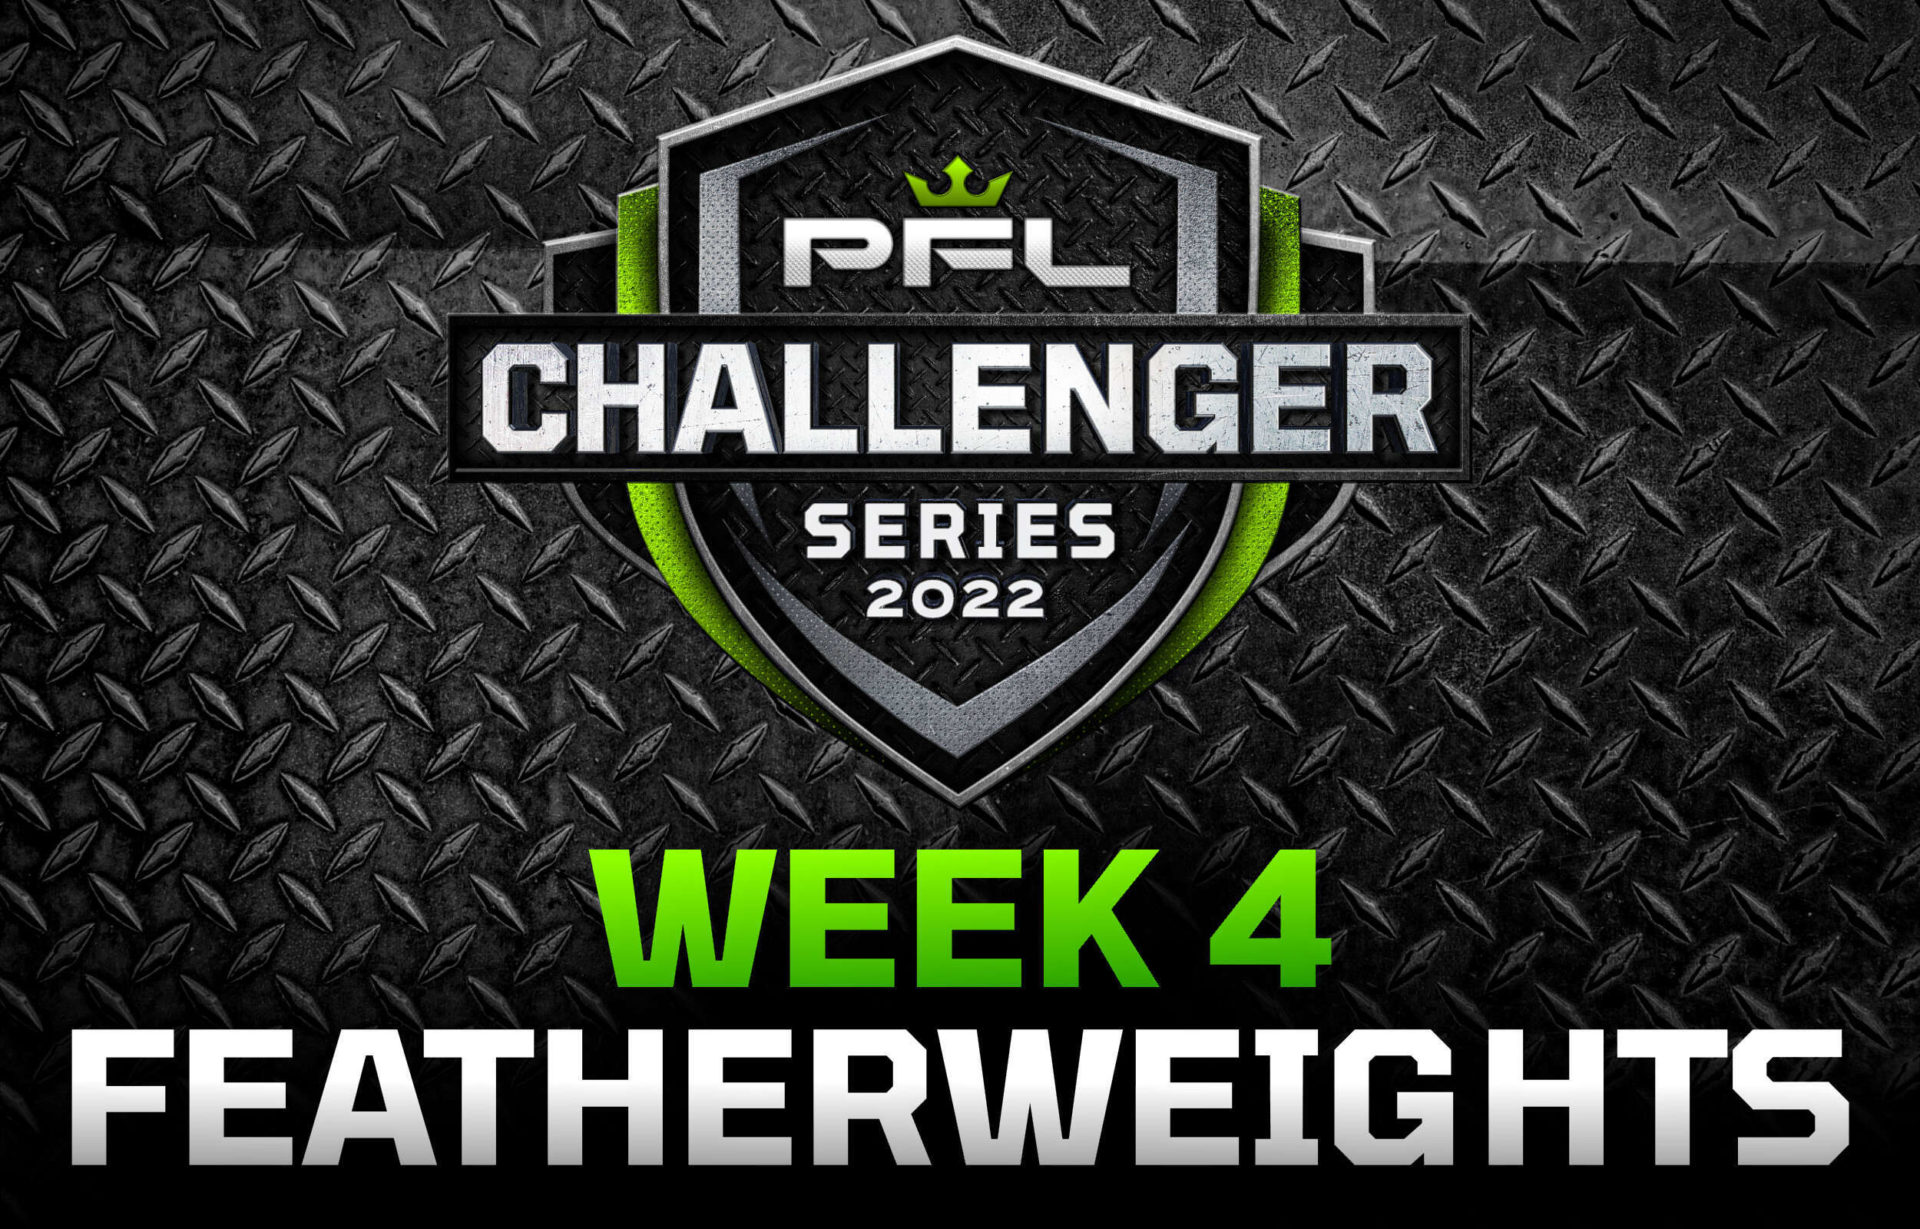 PFL Challenger Series 2022 - Week 4